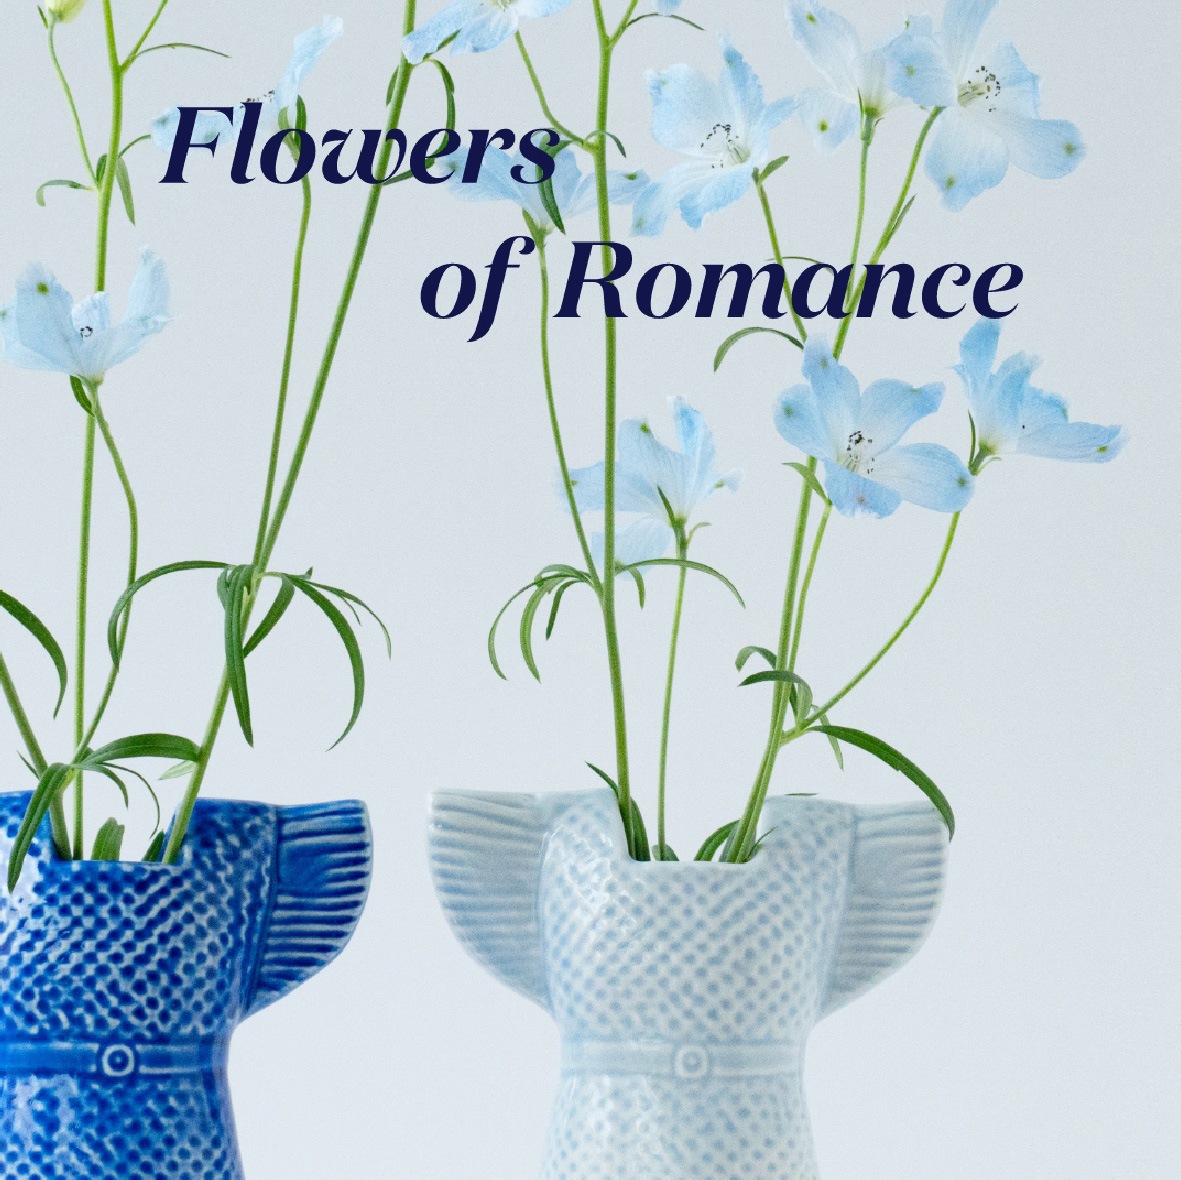 Flowers of Romance